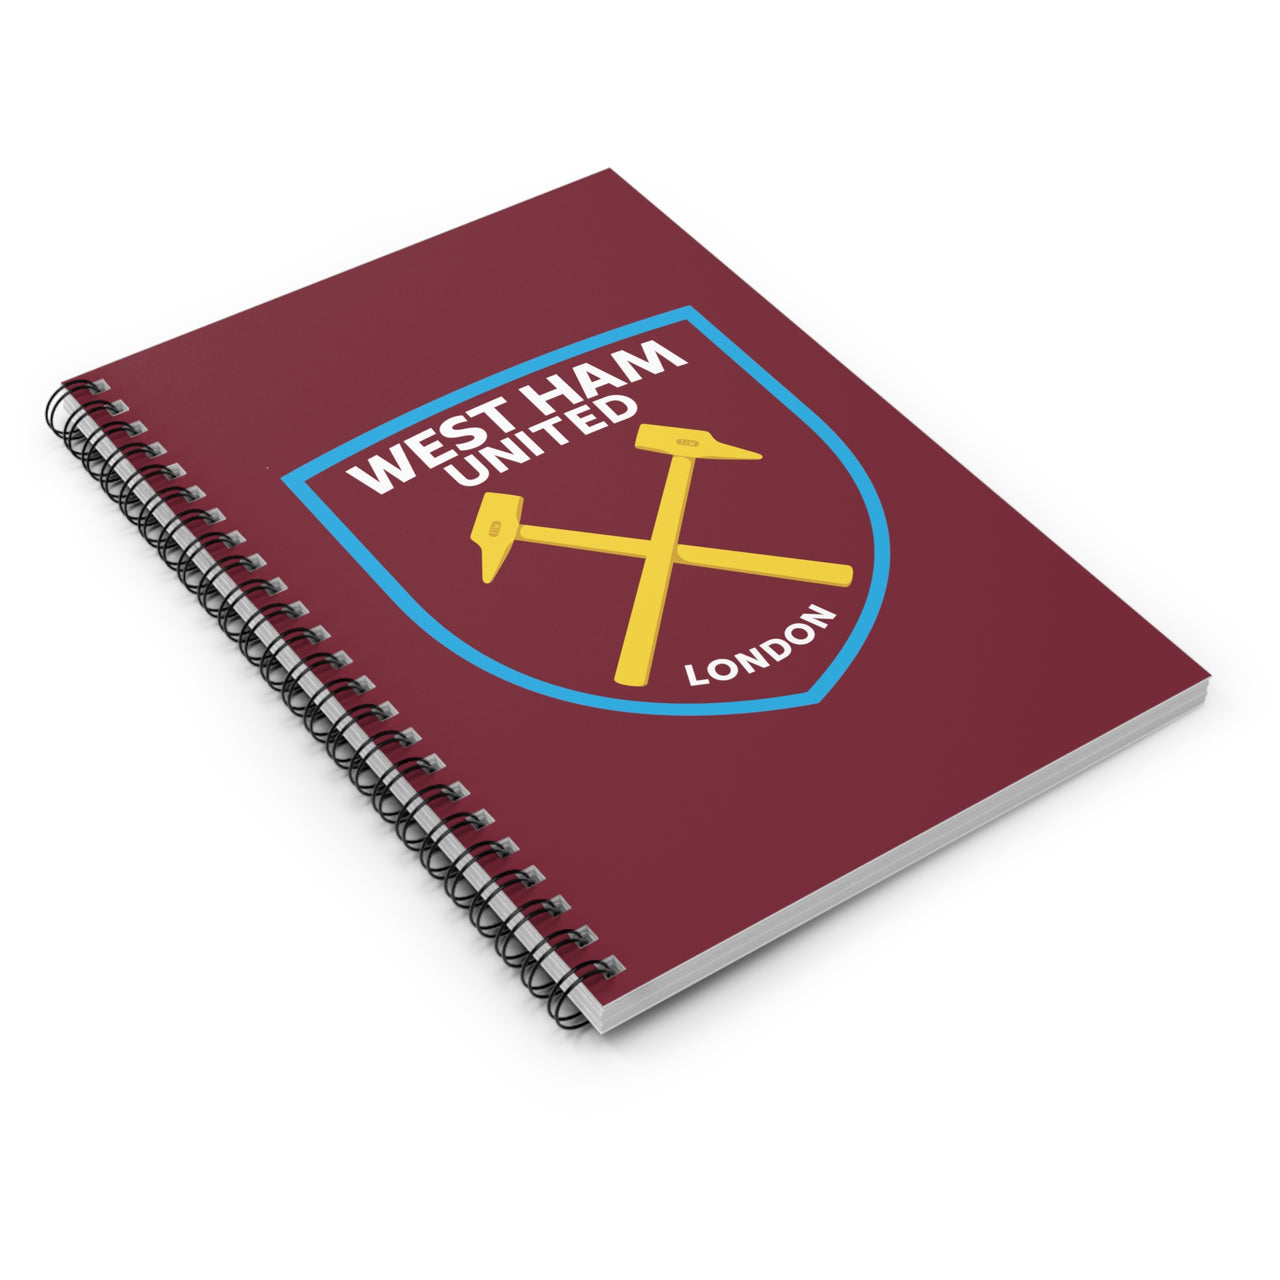 West Ham Spiral Notebook - Ruled Line